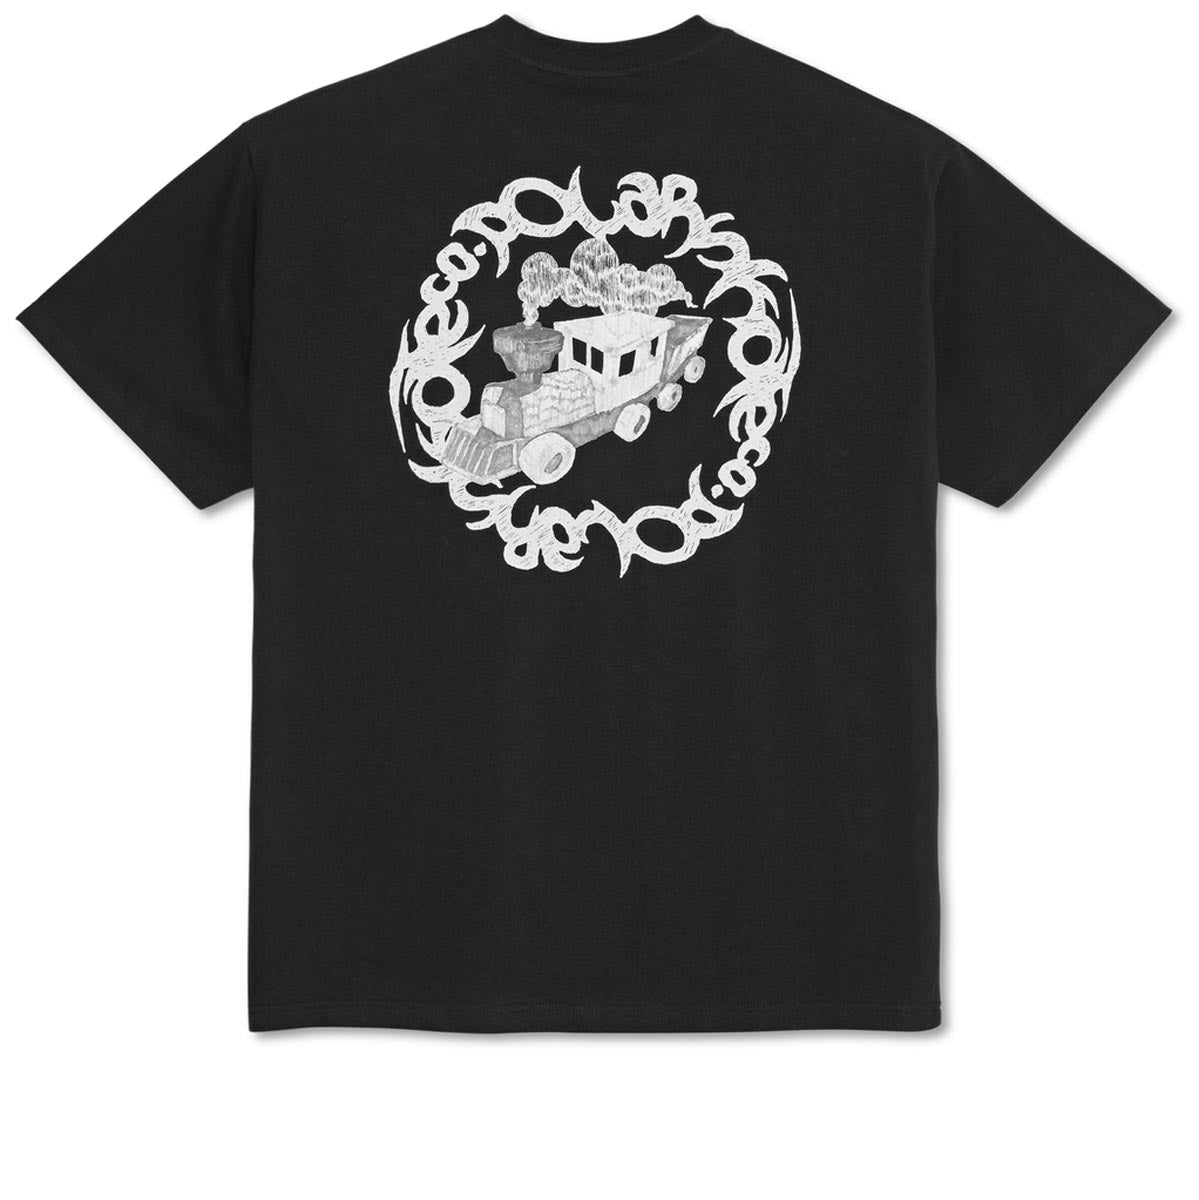 Polar Hijack T-Shirt - Black image 2